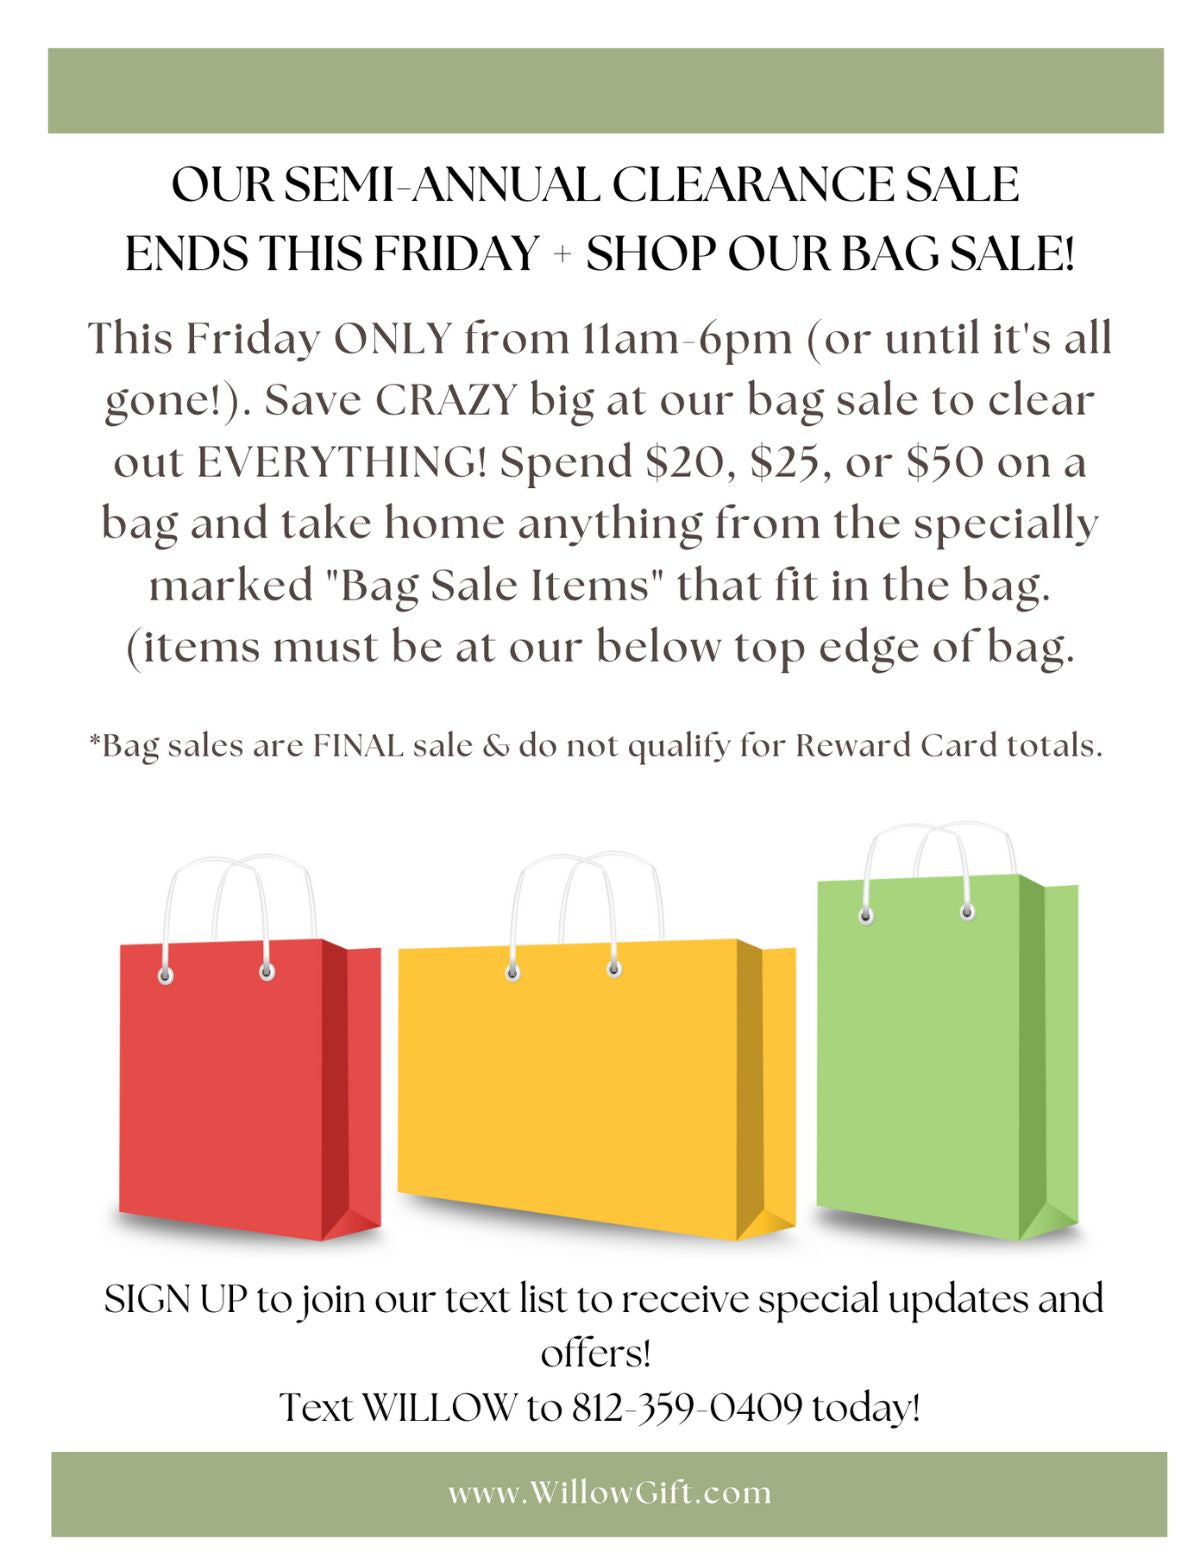 Semi-annual bag sale - clearance items